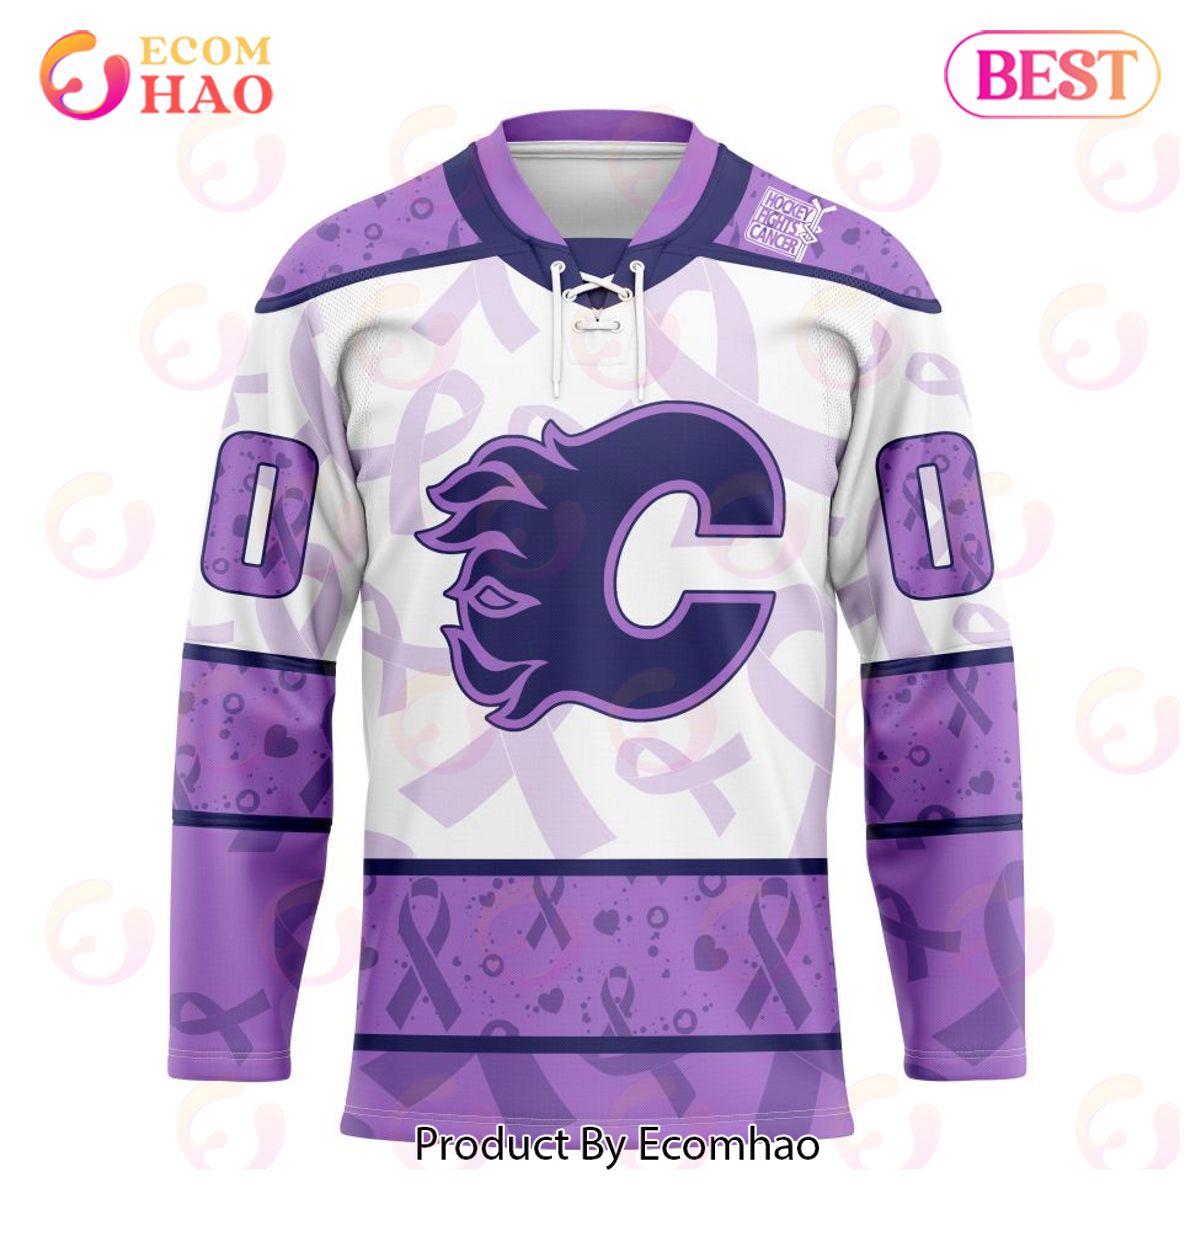 Calgary Flames introduce lavender cancer awareness jerseys